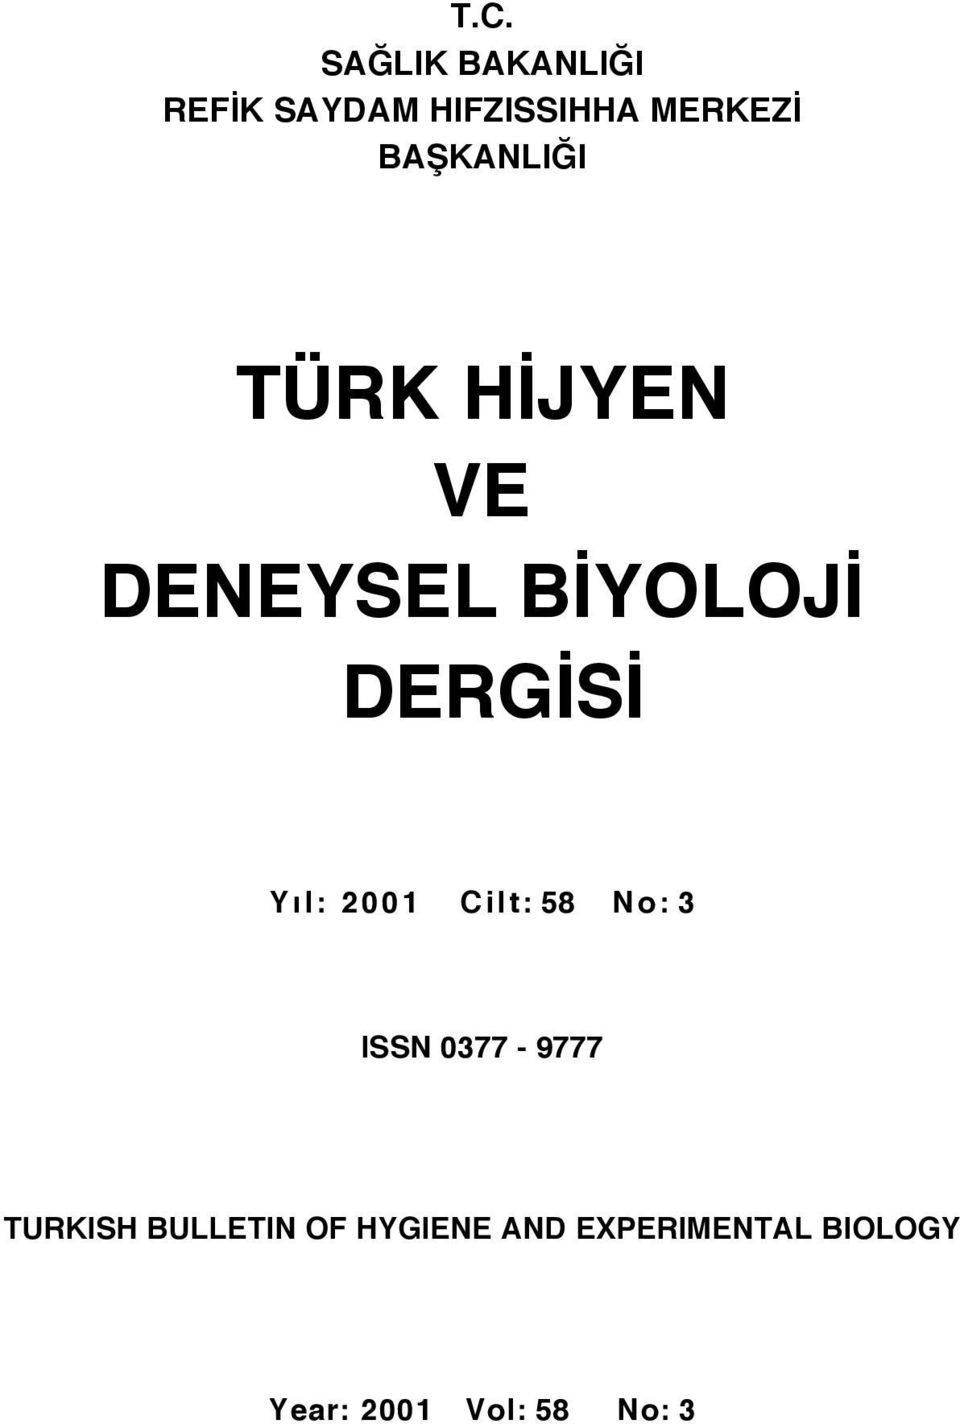 2001 C ilt: 58 N o : 3 ISSN 0377-9777 TURKISH BULLETIN